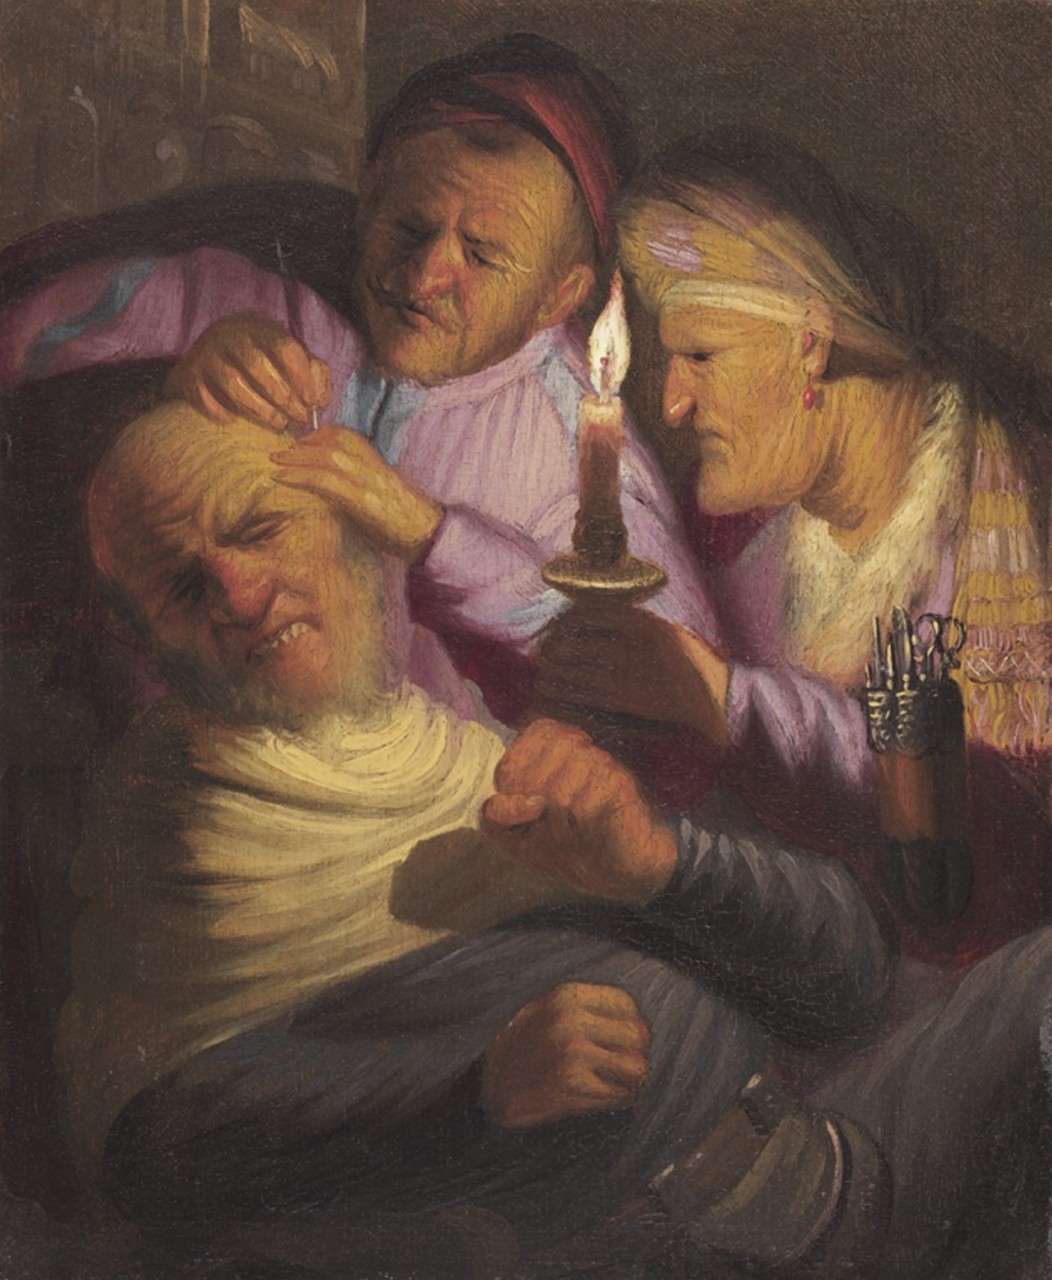 Keisnijding-Rembrandt-Leiden-Gallery-New-York.jpg